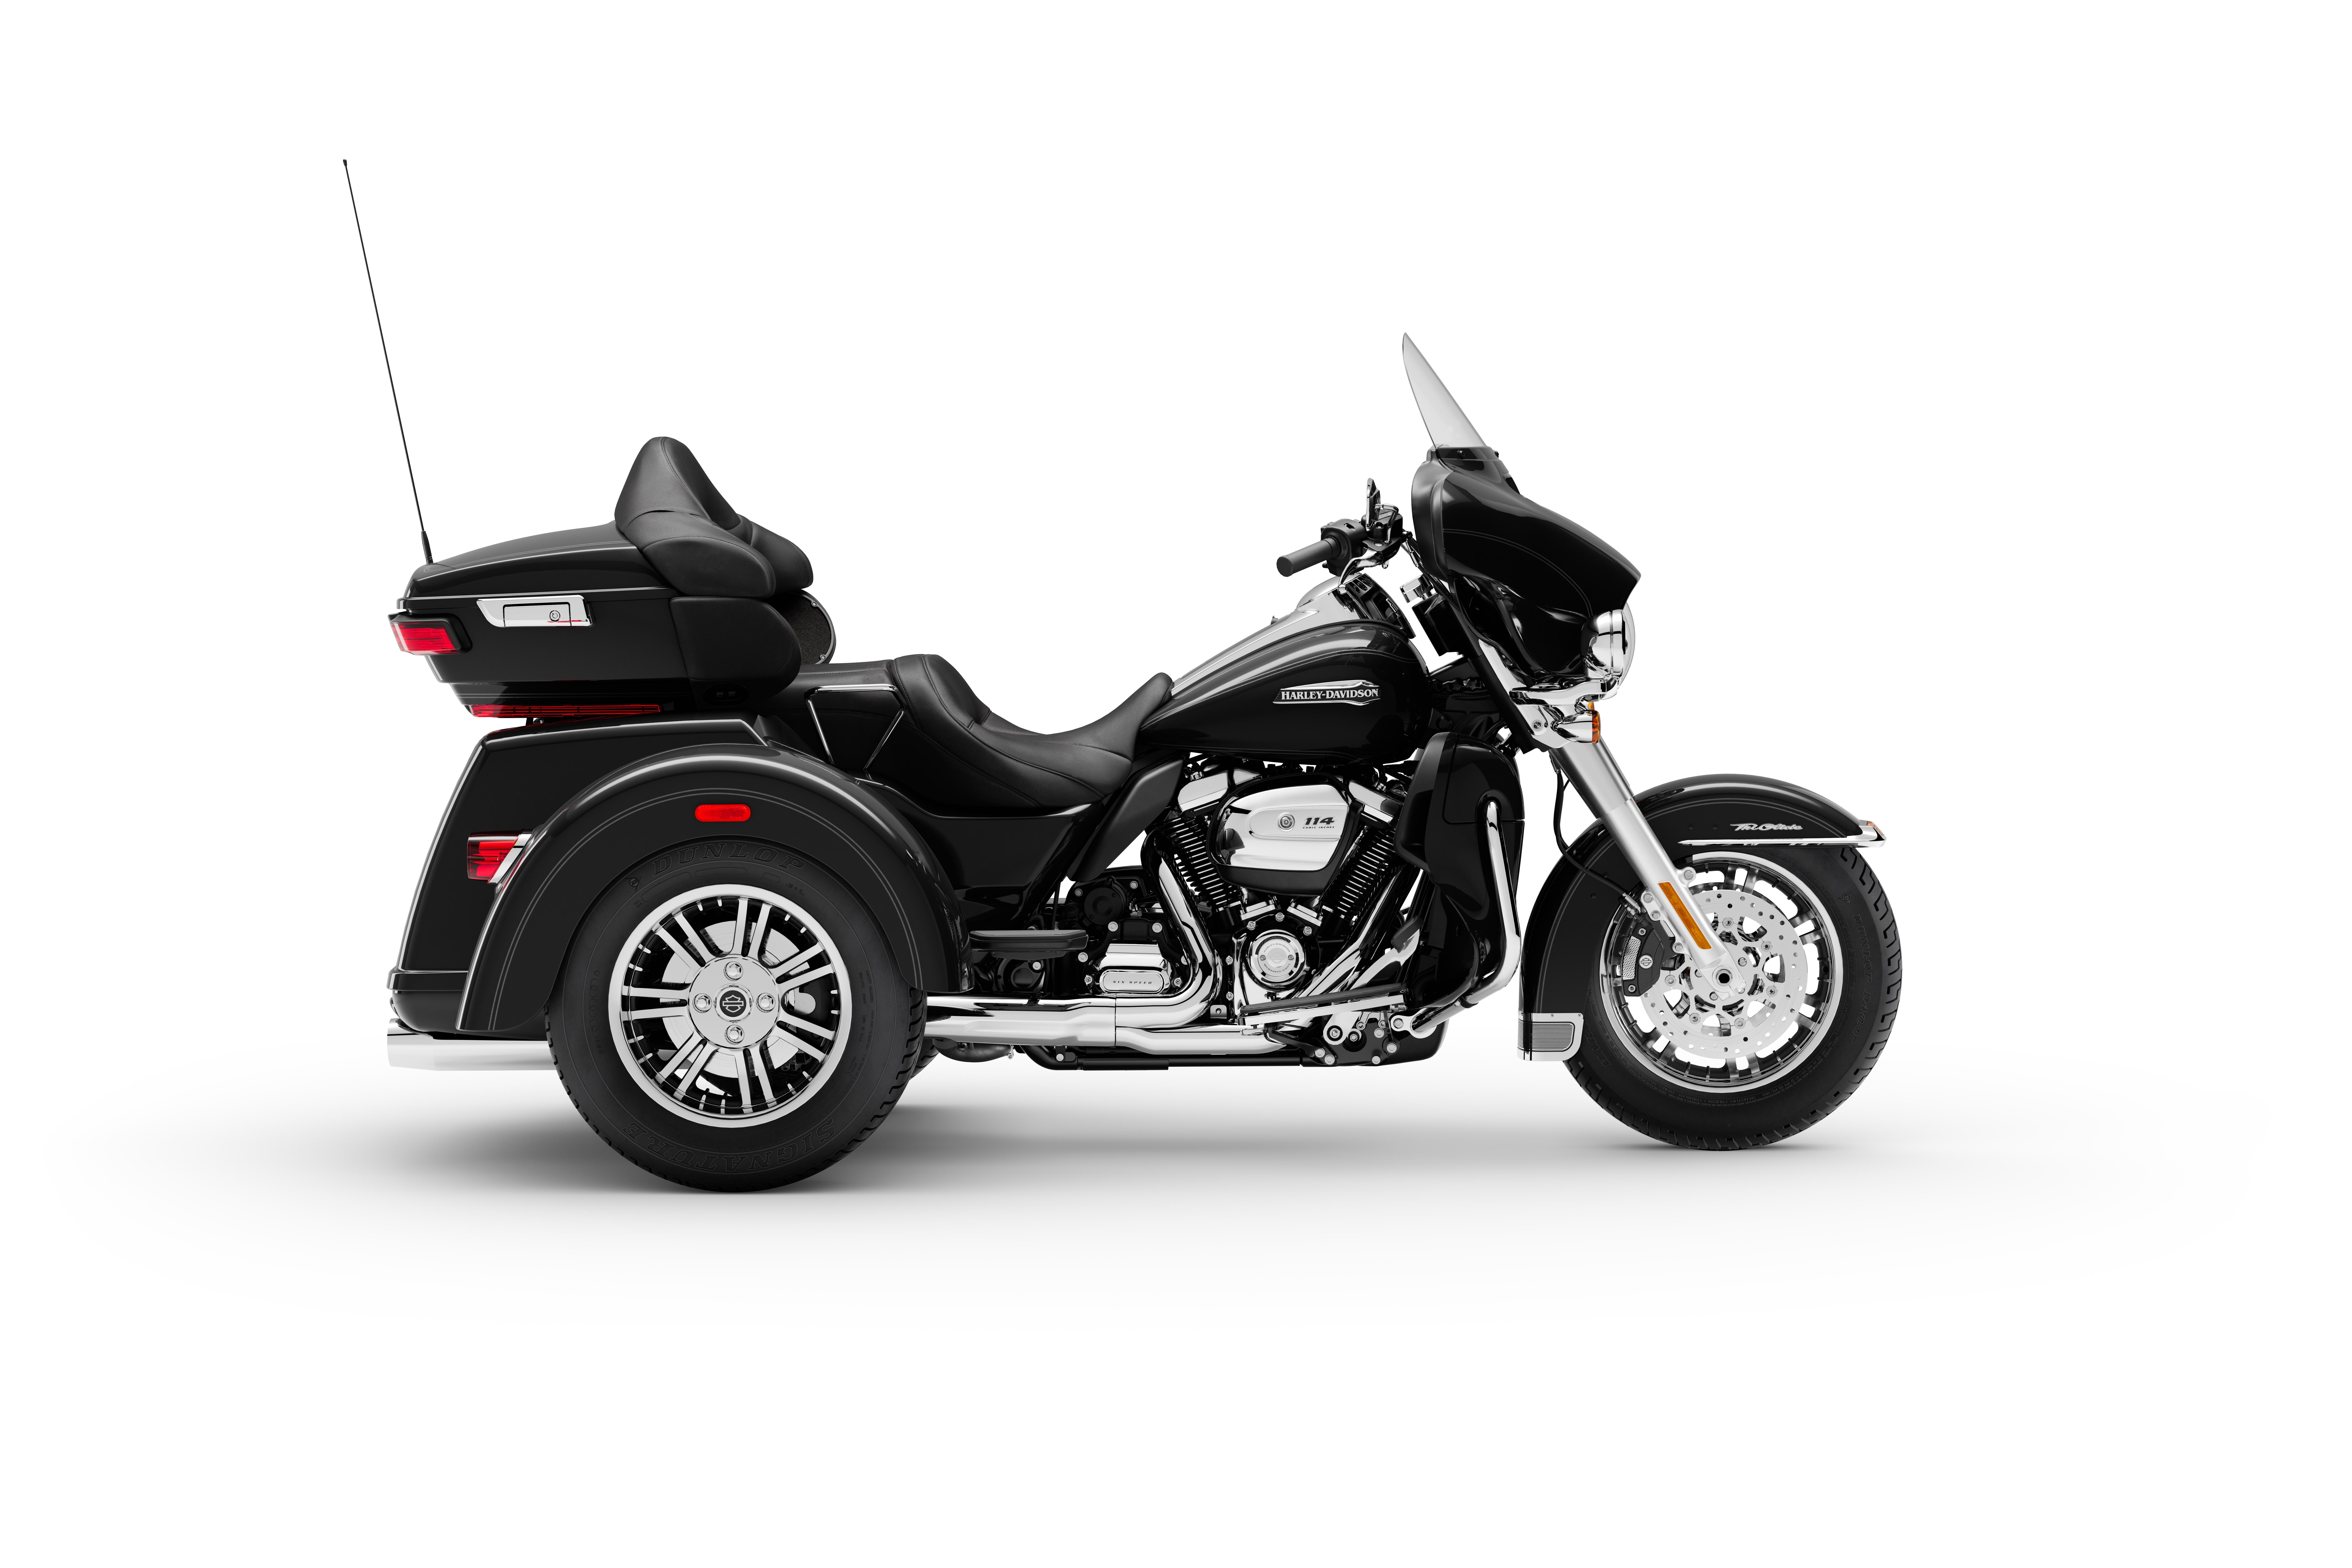 2020 Harley-Davidson Tri Glide Ultra Buyer's Guide: Specs, Photos